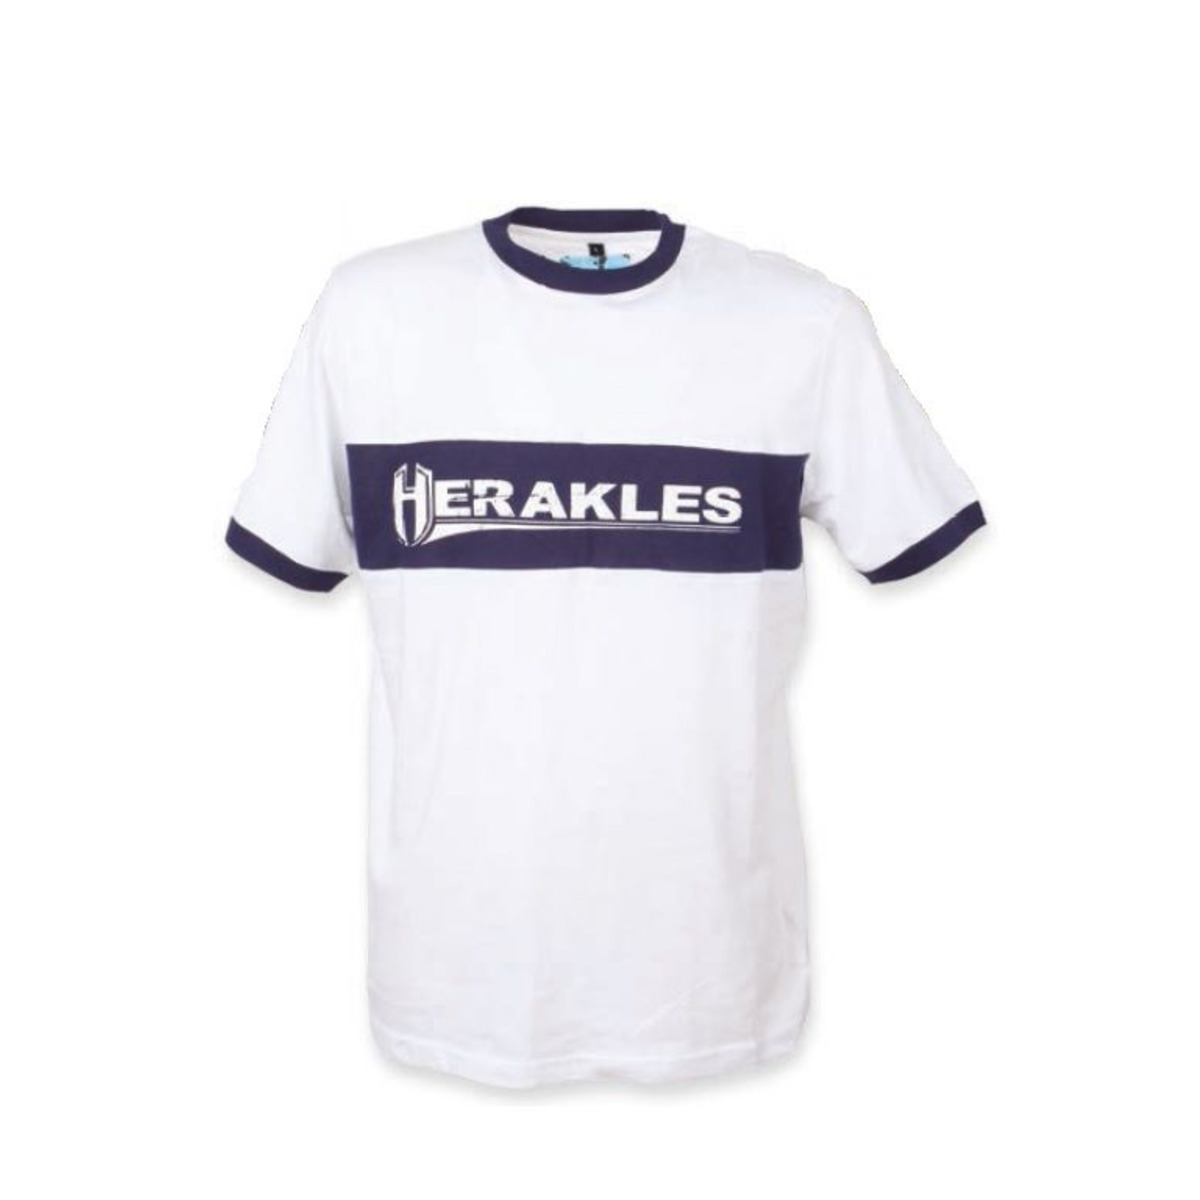 Herakles White-Blue T-Shirt - L